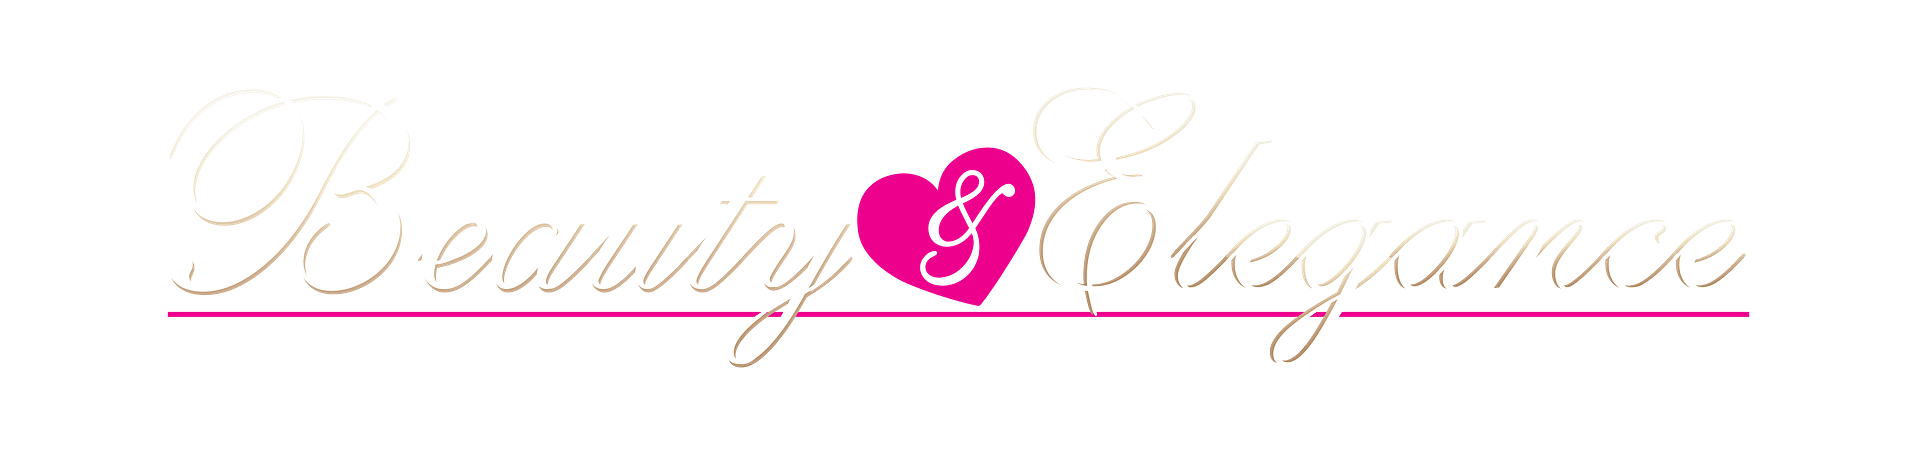 Beauty and Elegance Academy, Logo